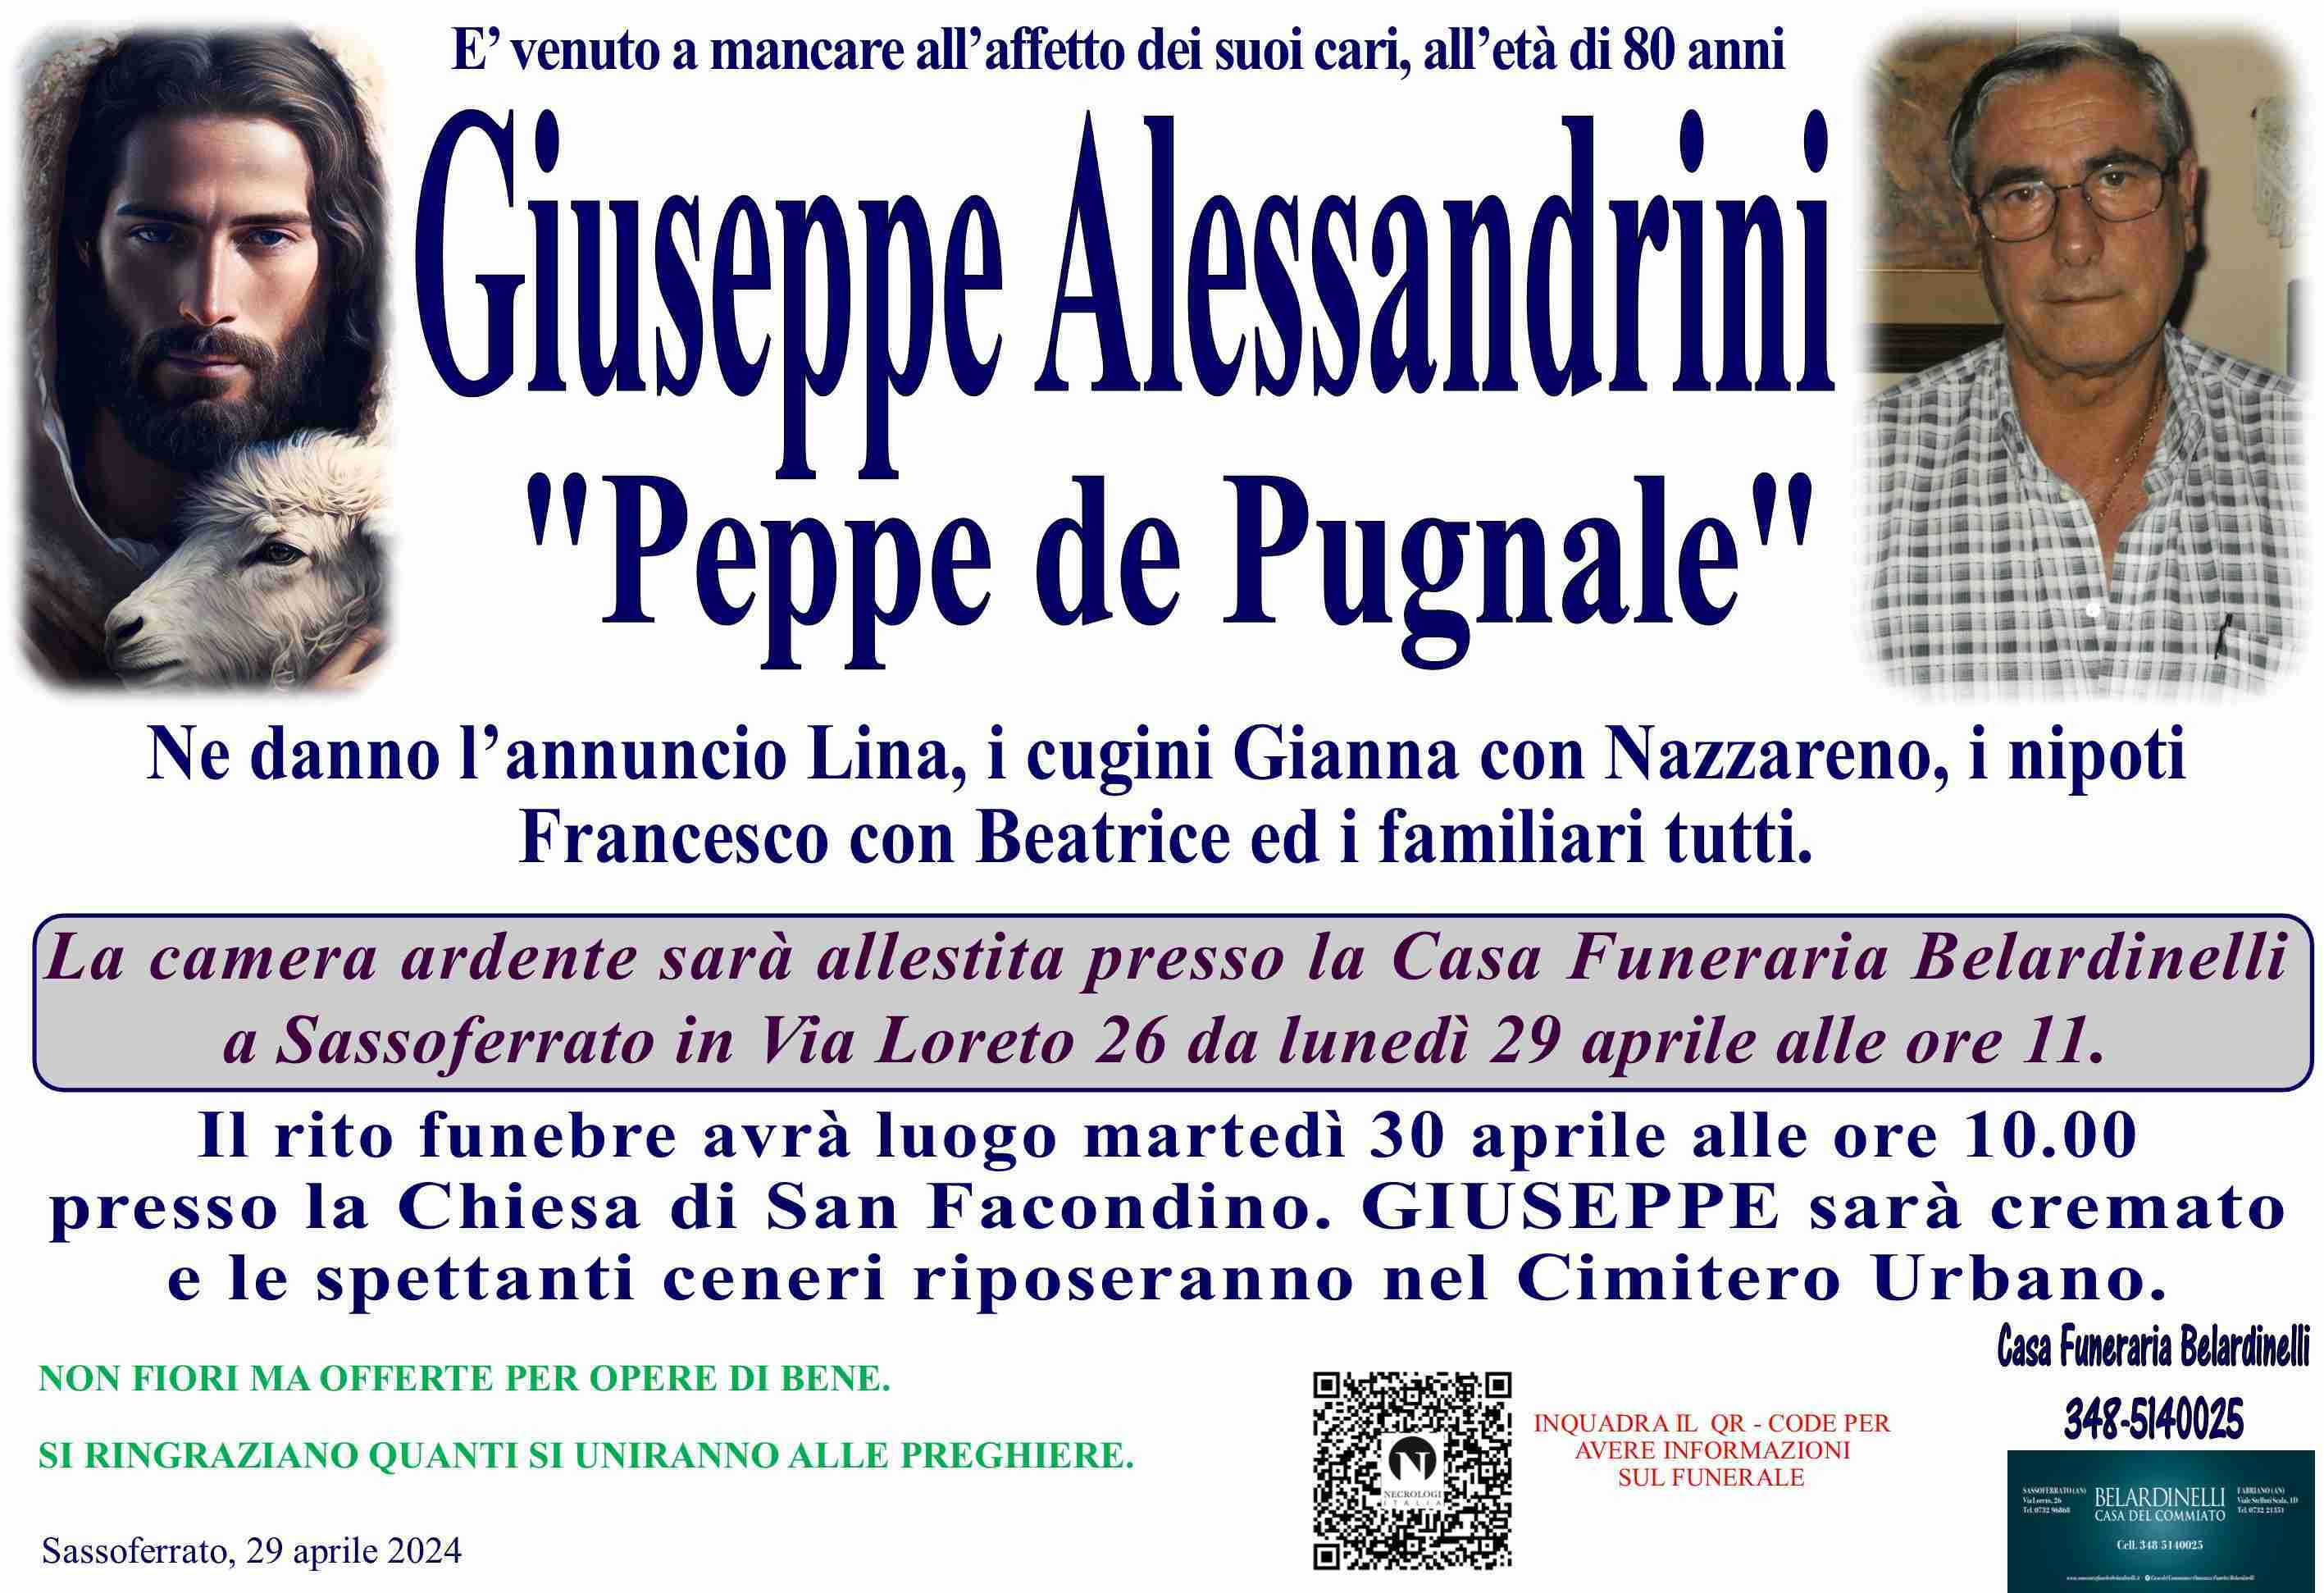 Giuseppe Alessandrini